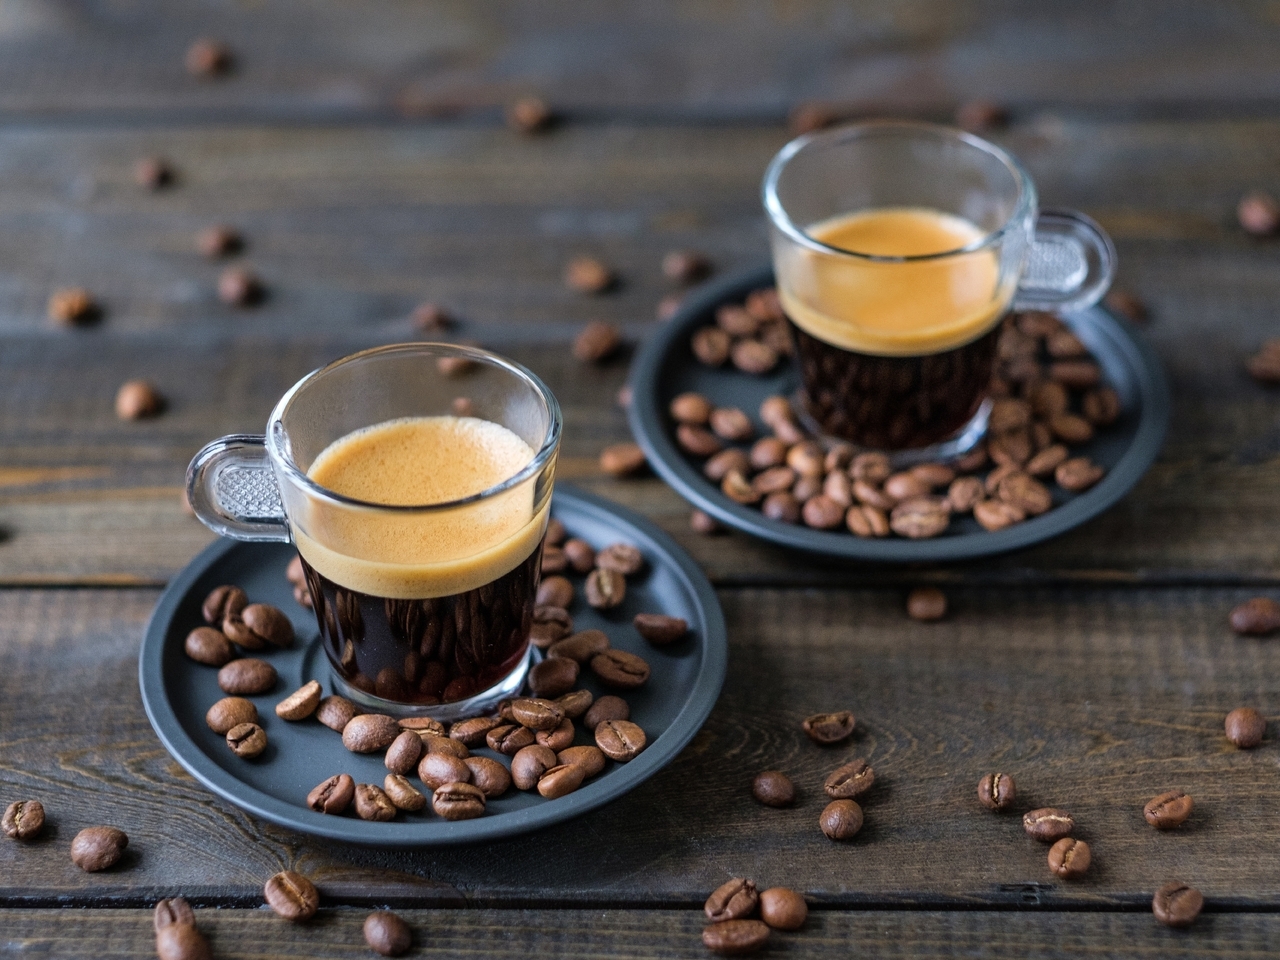 Image: Coffee, beans, mugs